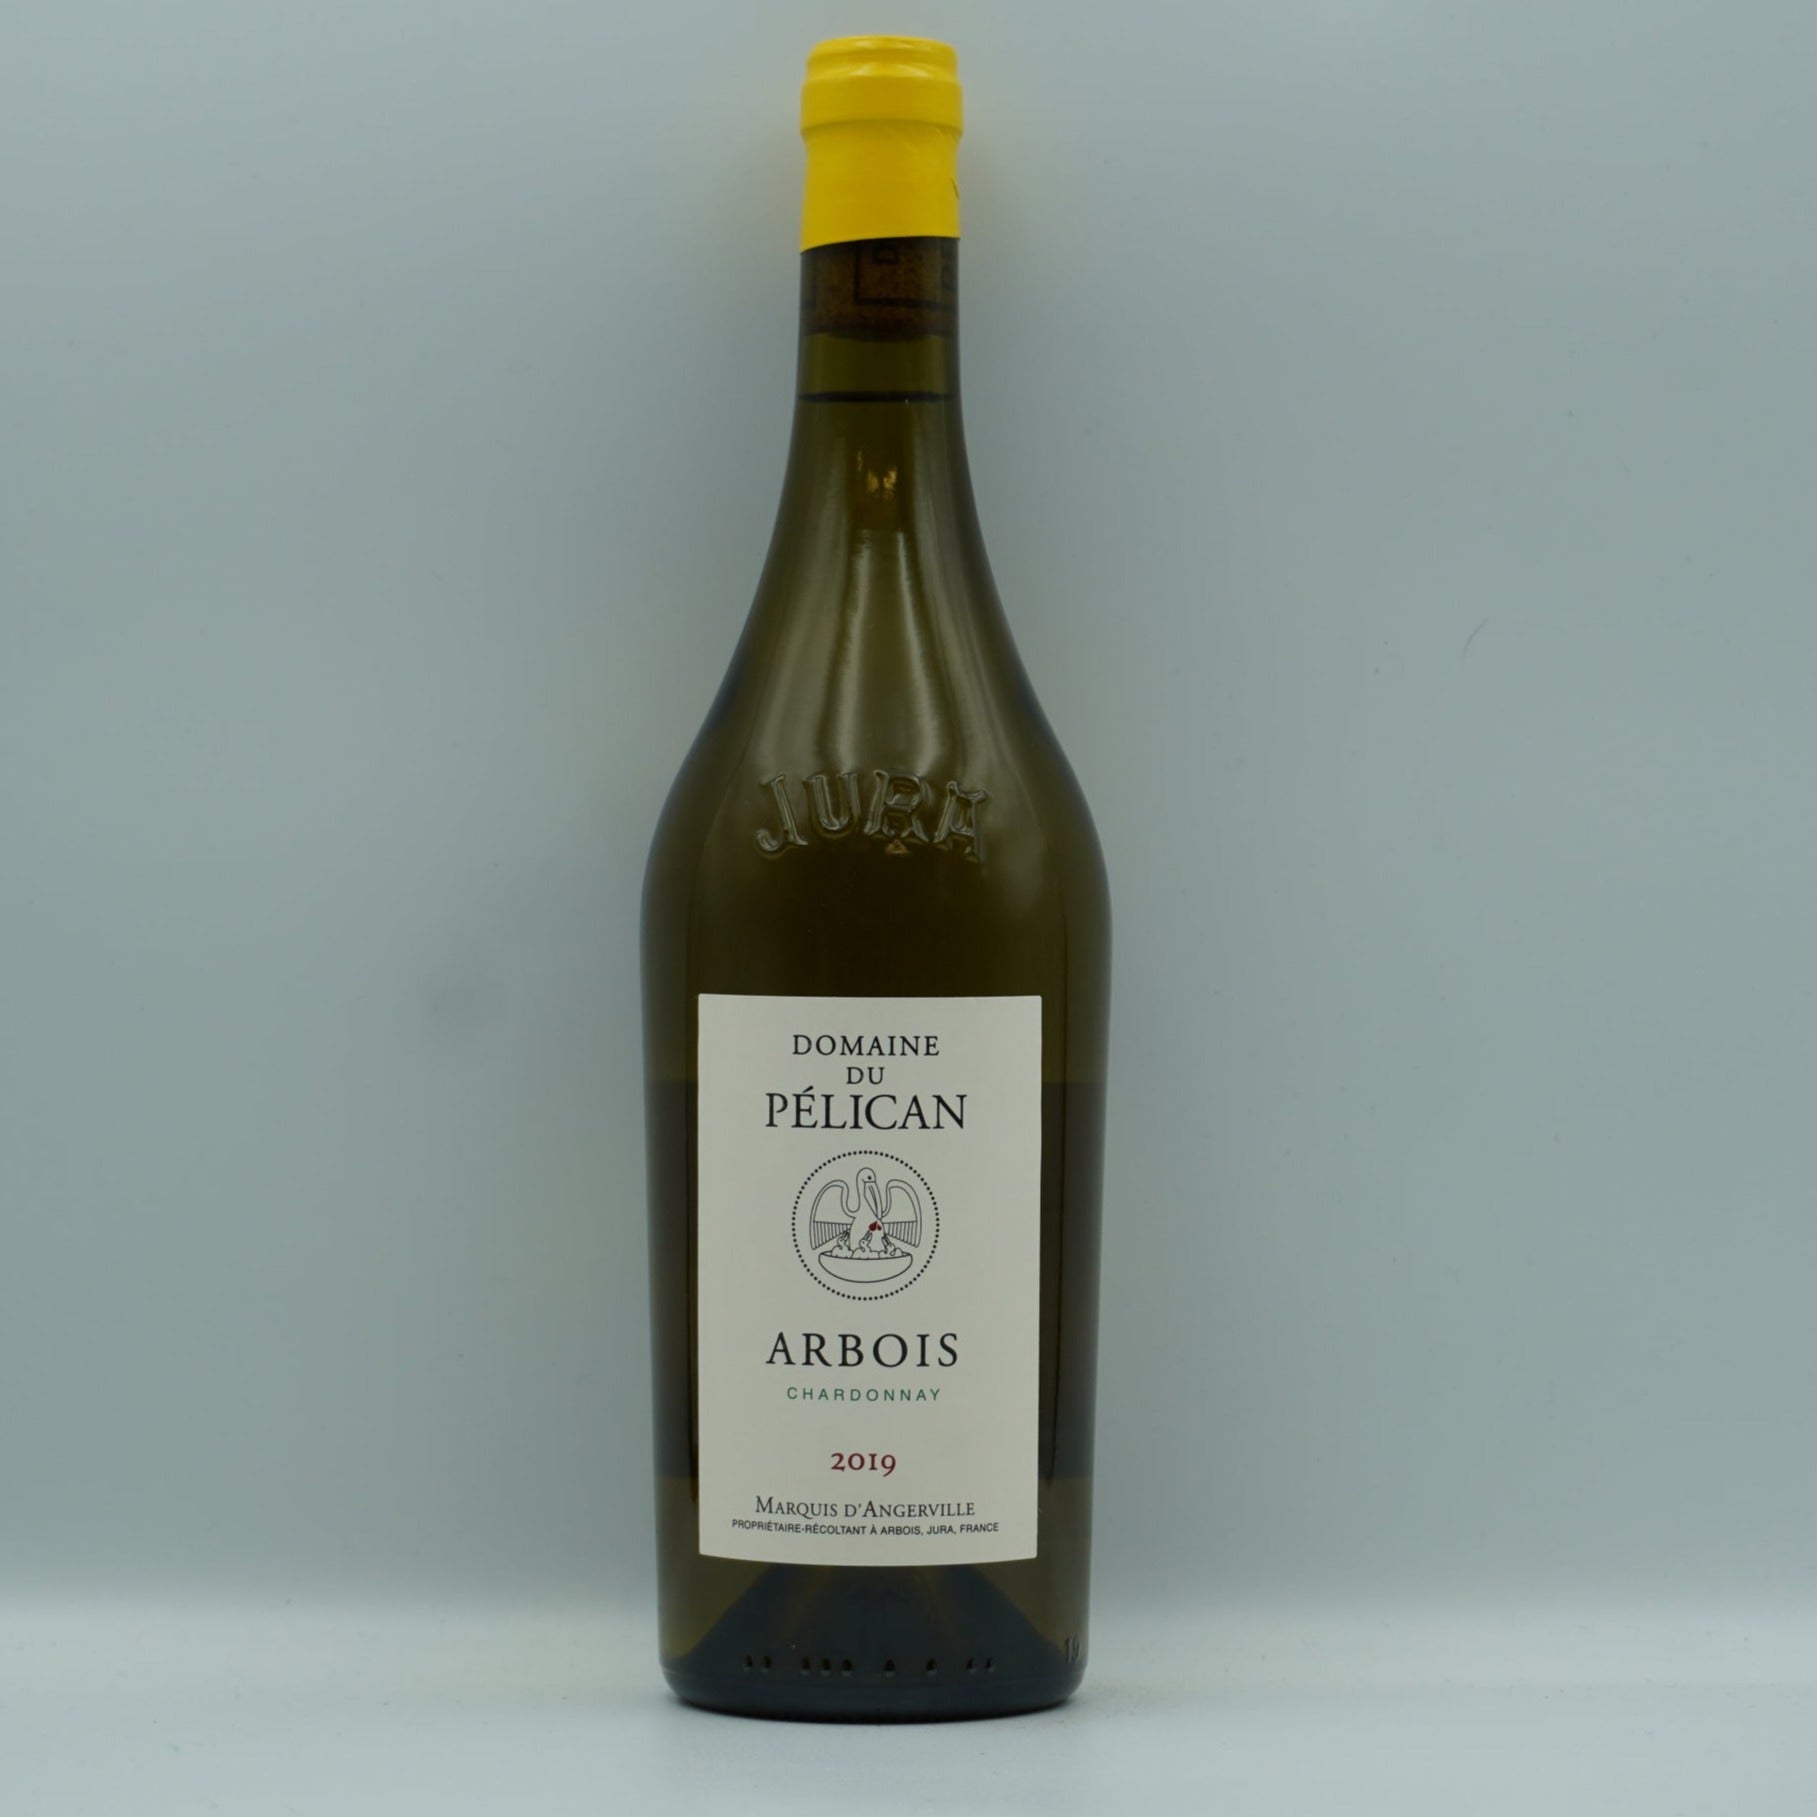 Domaine du Pélican, Arbois Chardonnay 2019